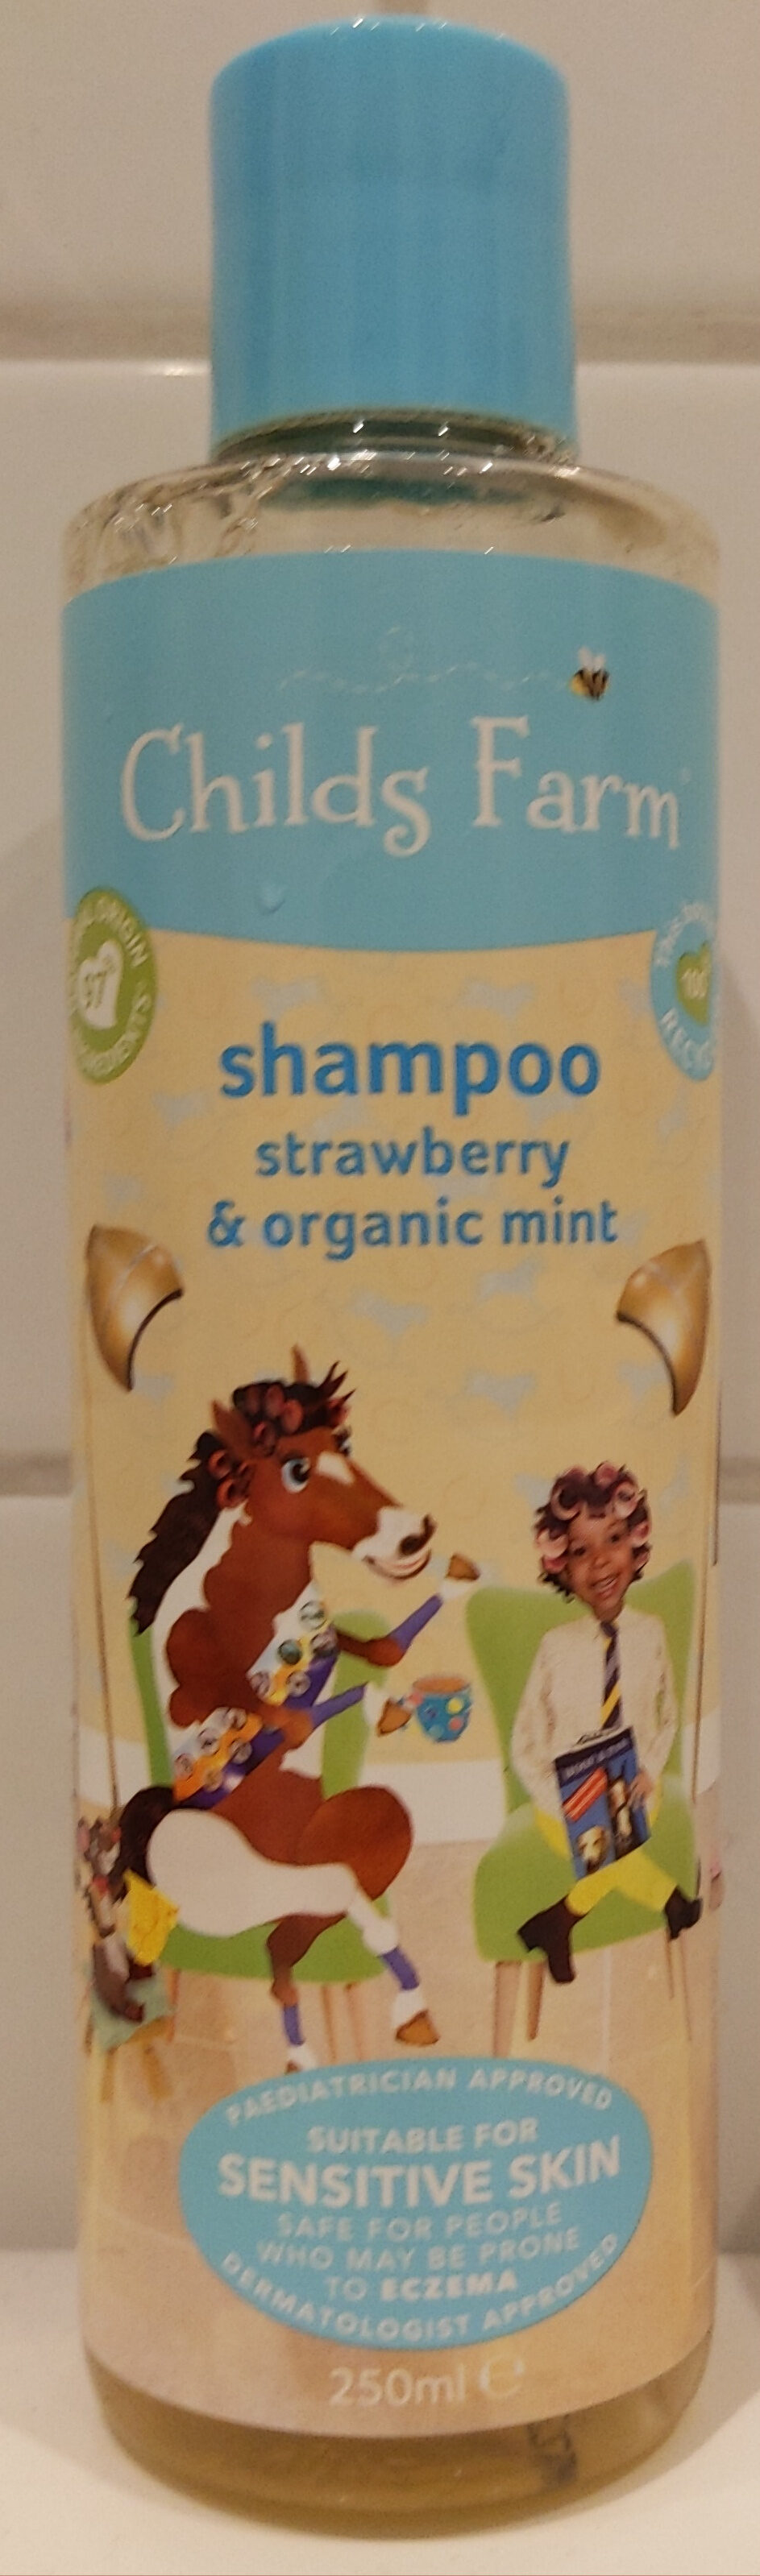 Strawberry and organic mint shampoo - Produkt - en